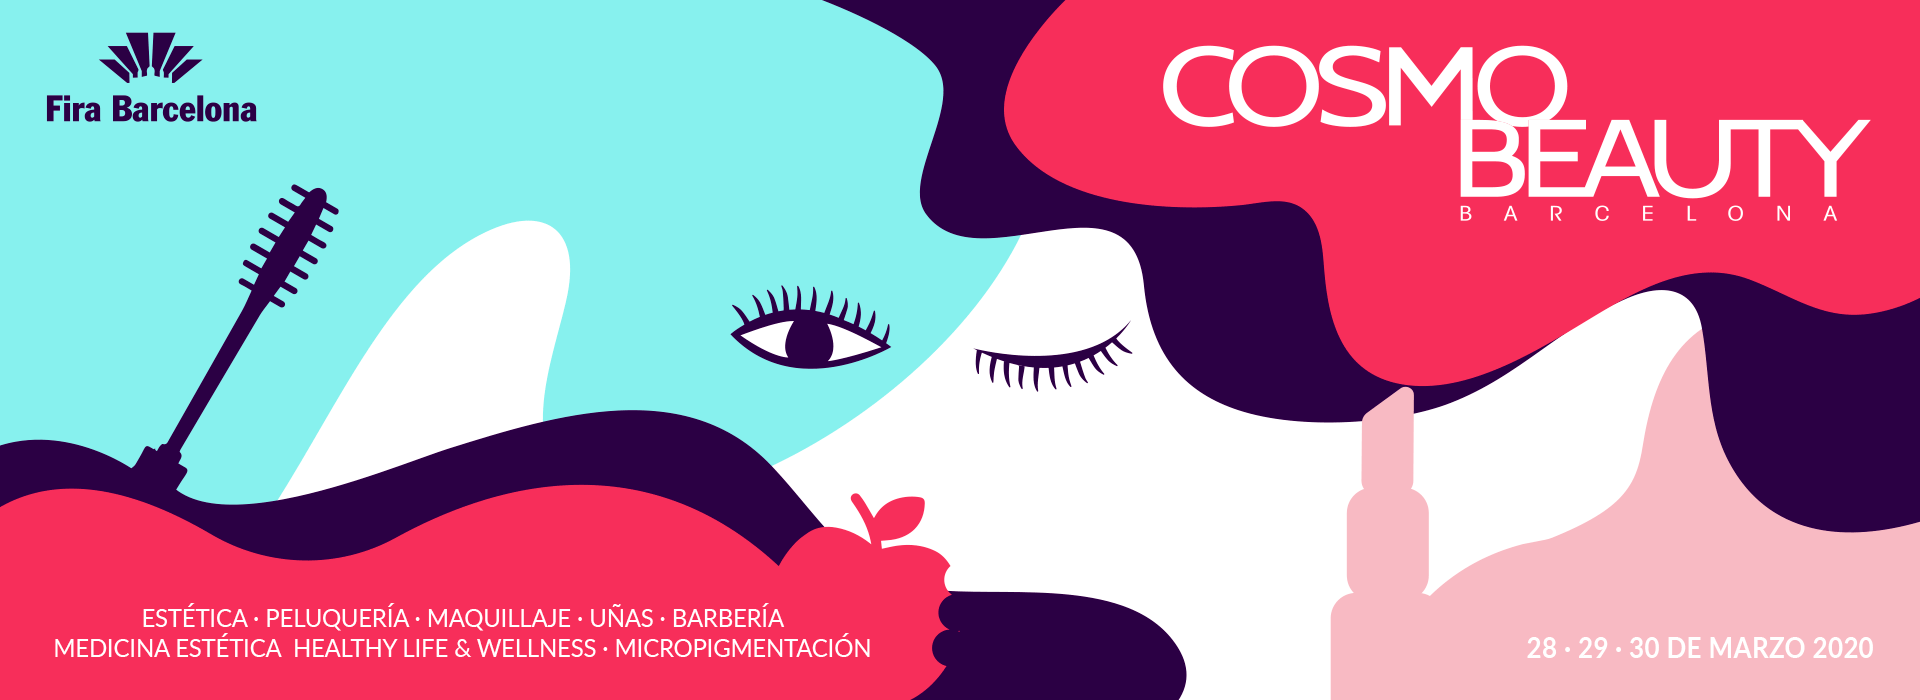 Cosmobeauty-Barcelona-Imagen-Congreso2020